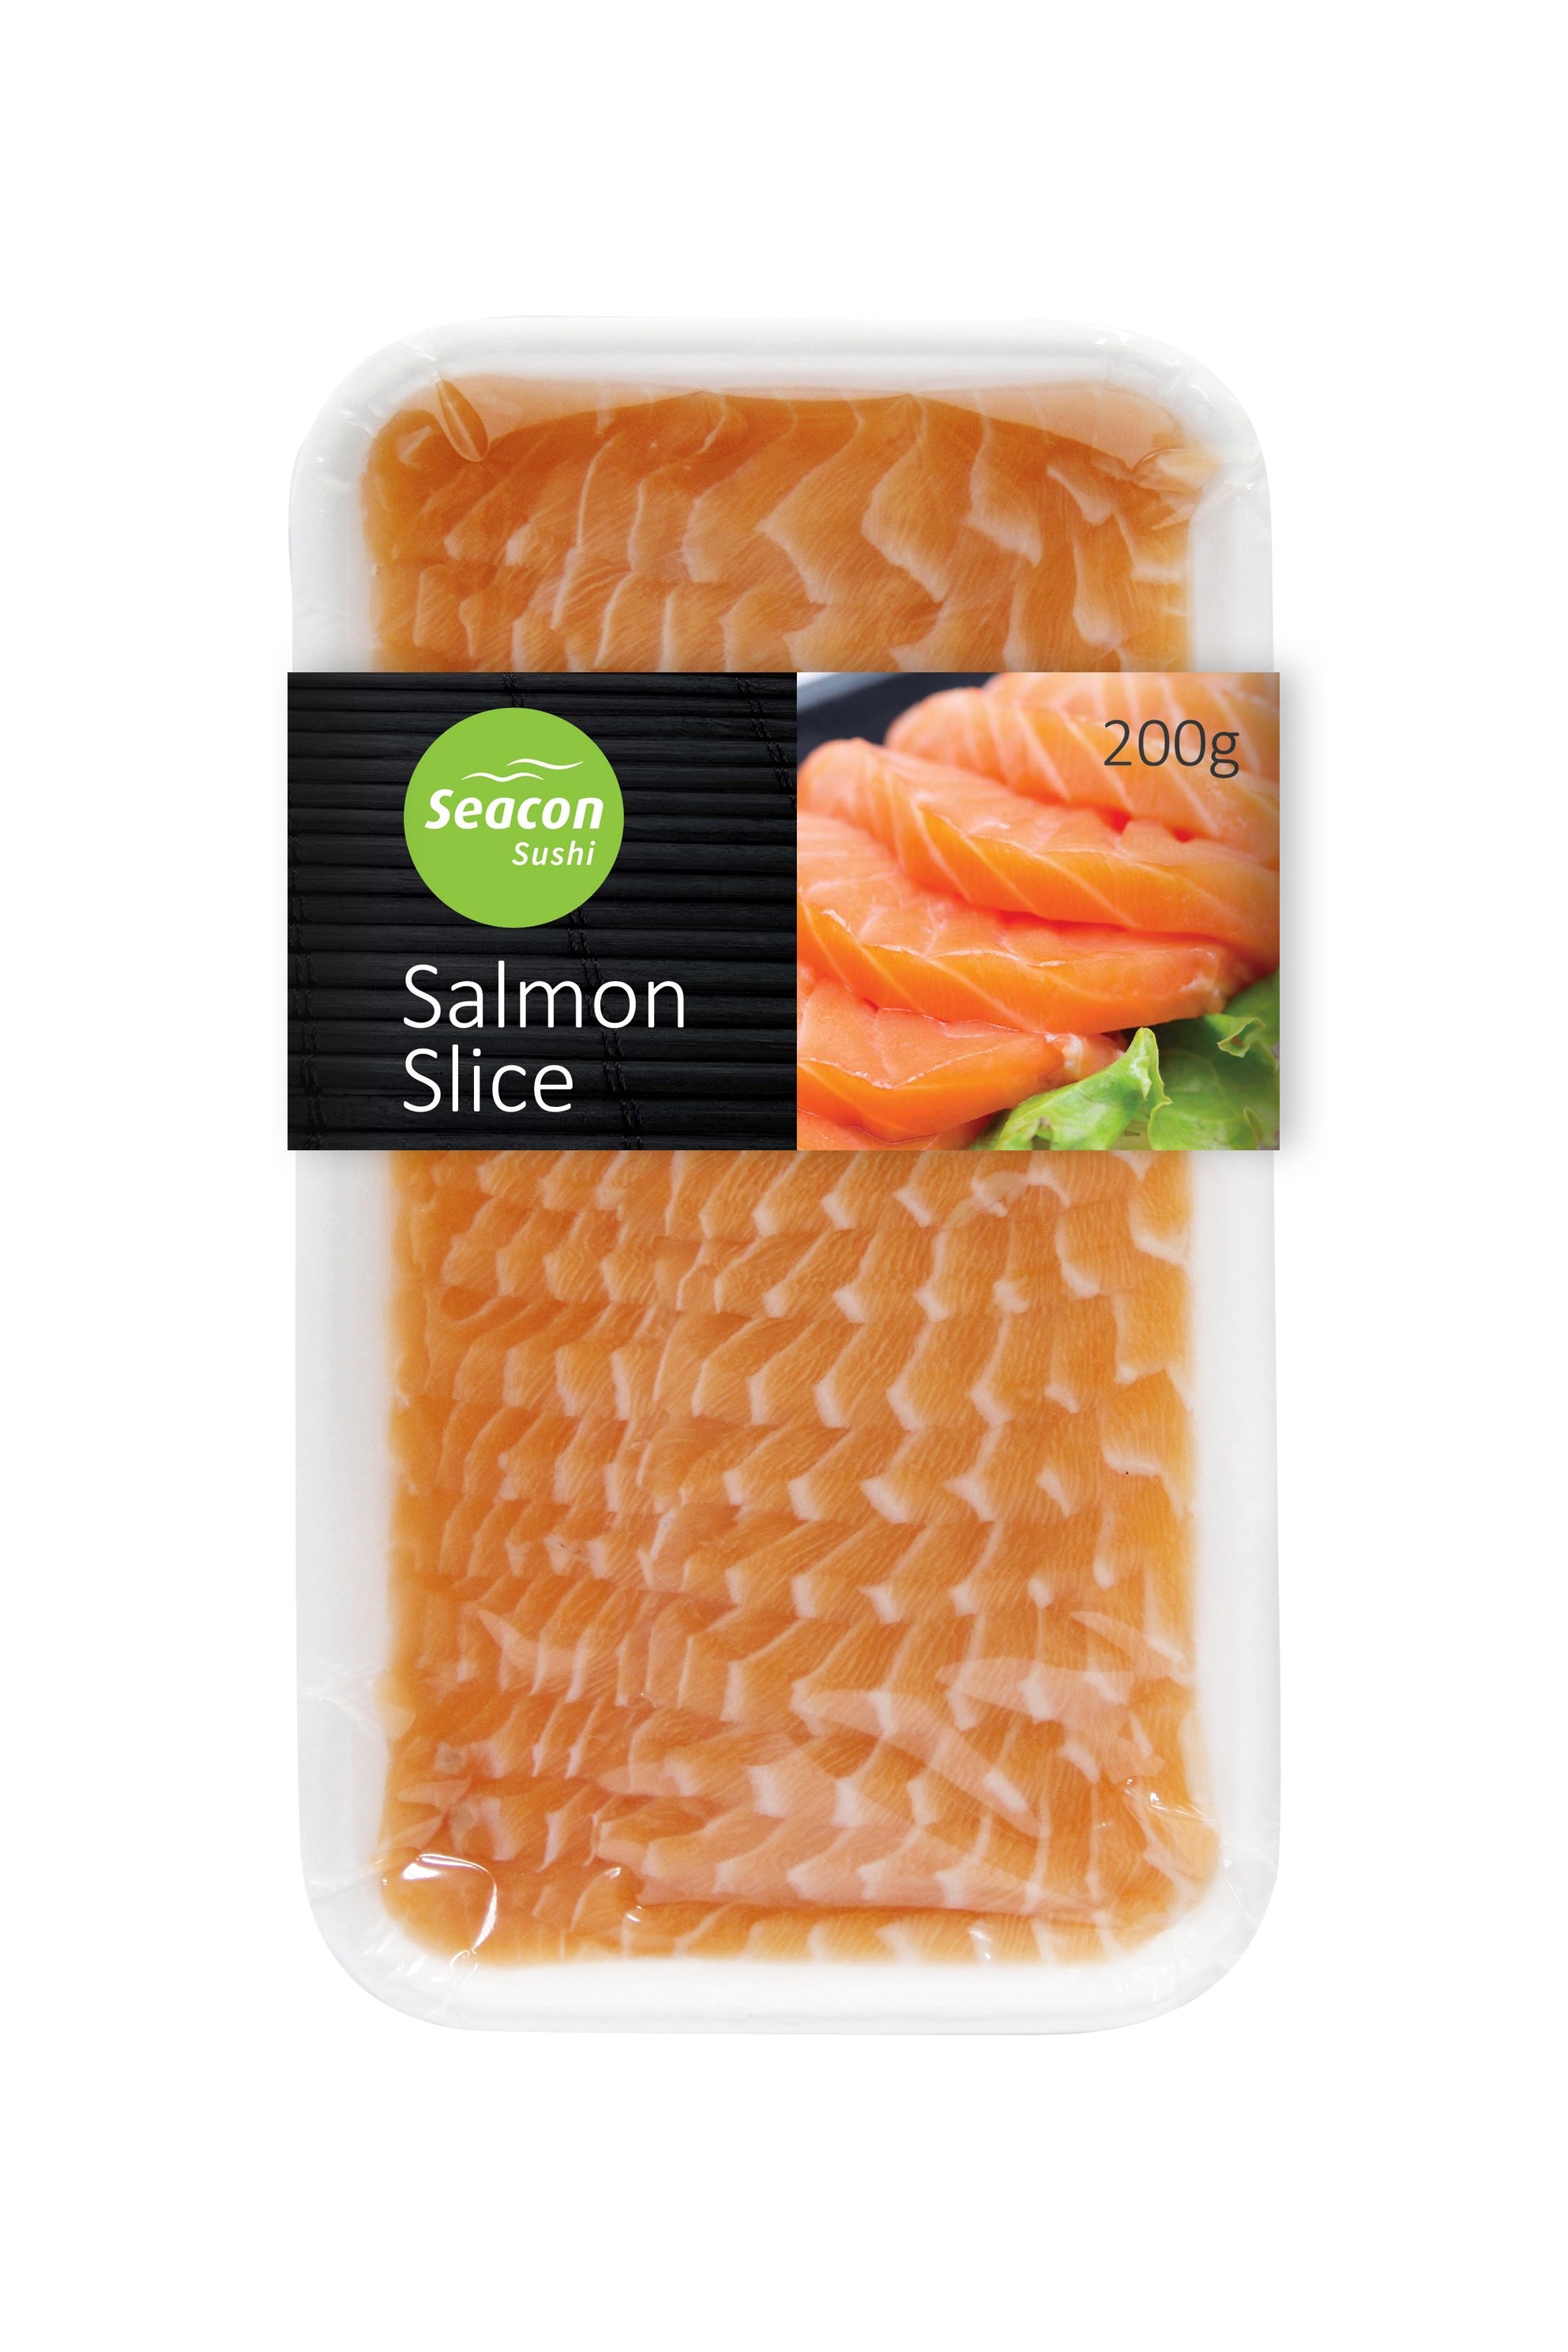 Salmon Slice 200g/20pcs 2 x 2 KG